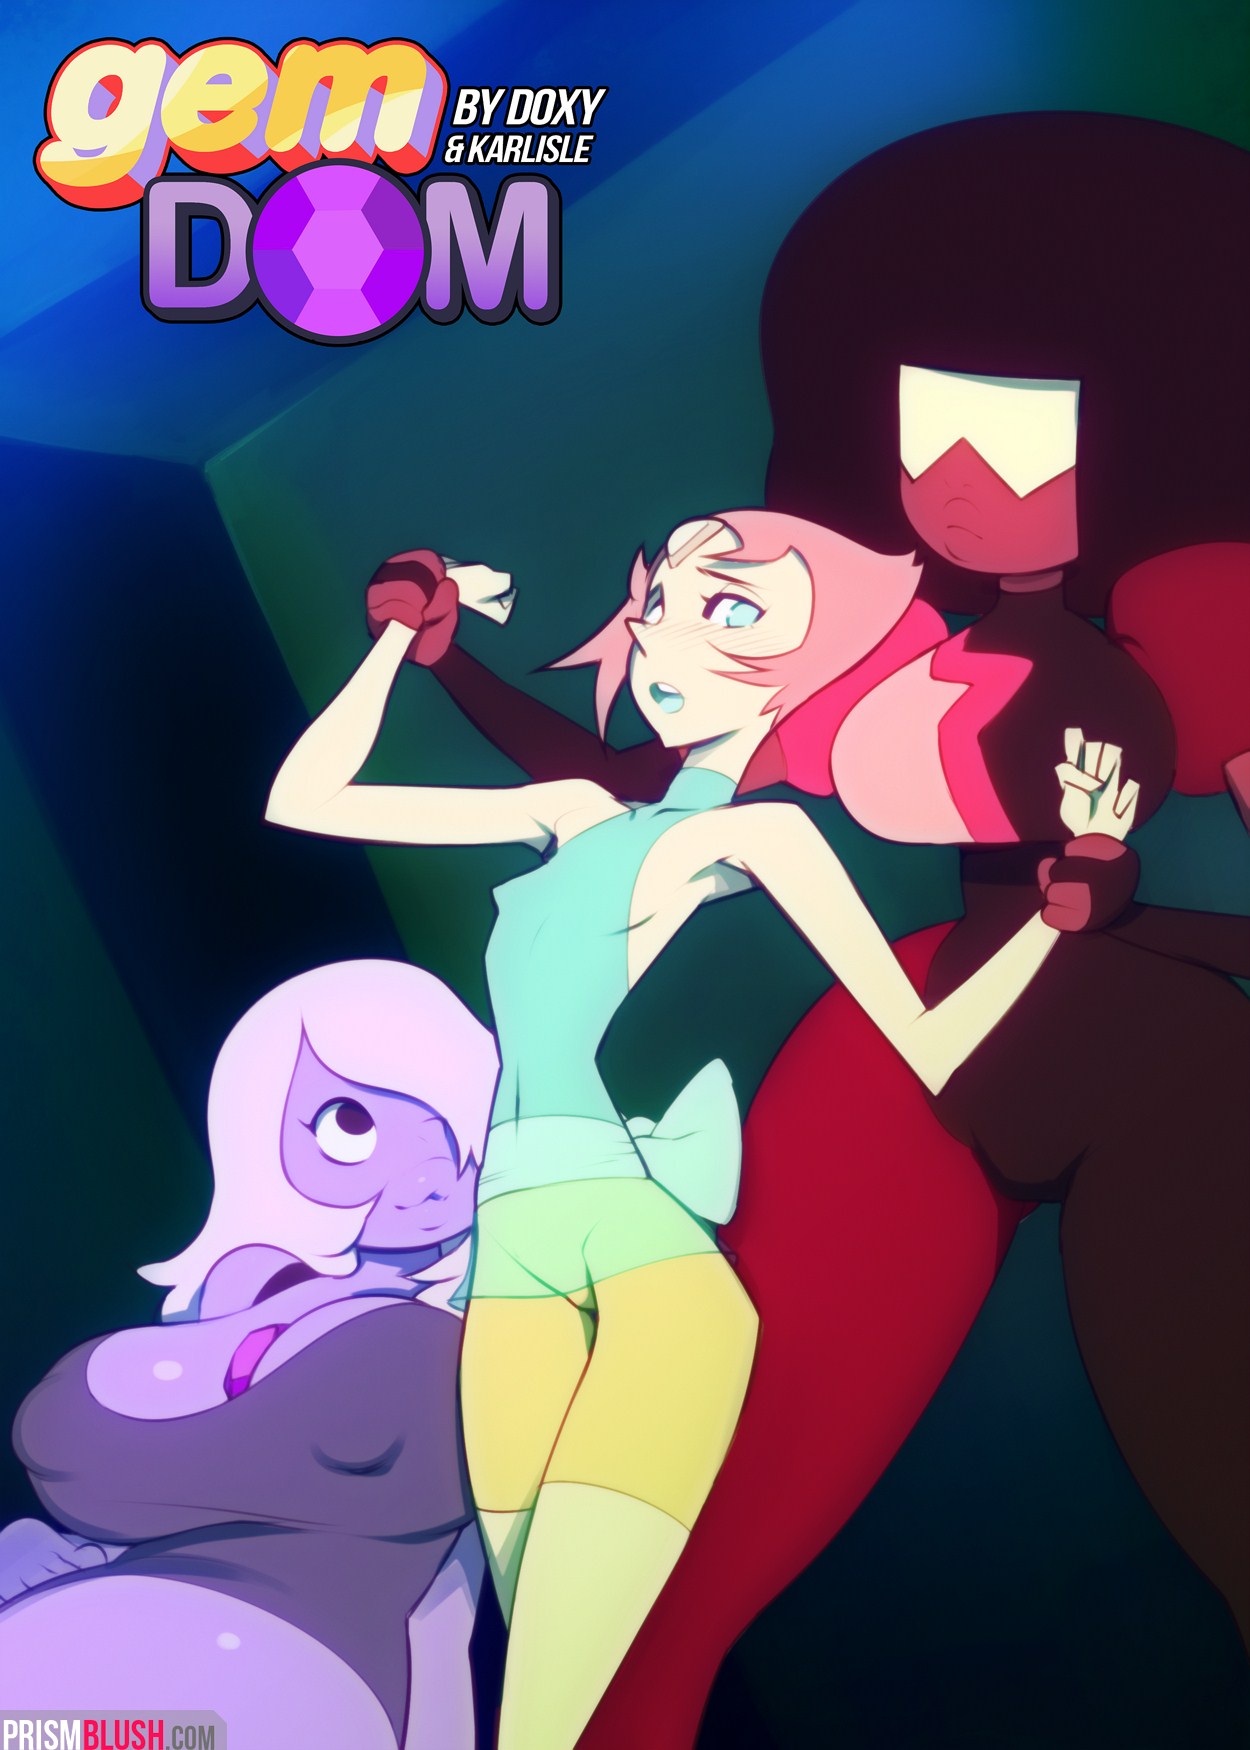 Gem Dom (Steven Universe) by Doxy